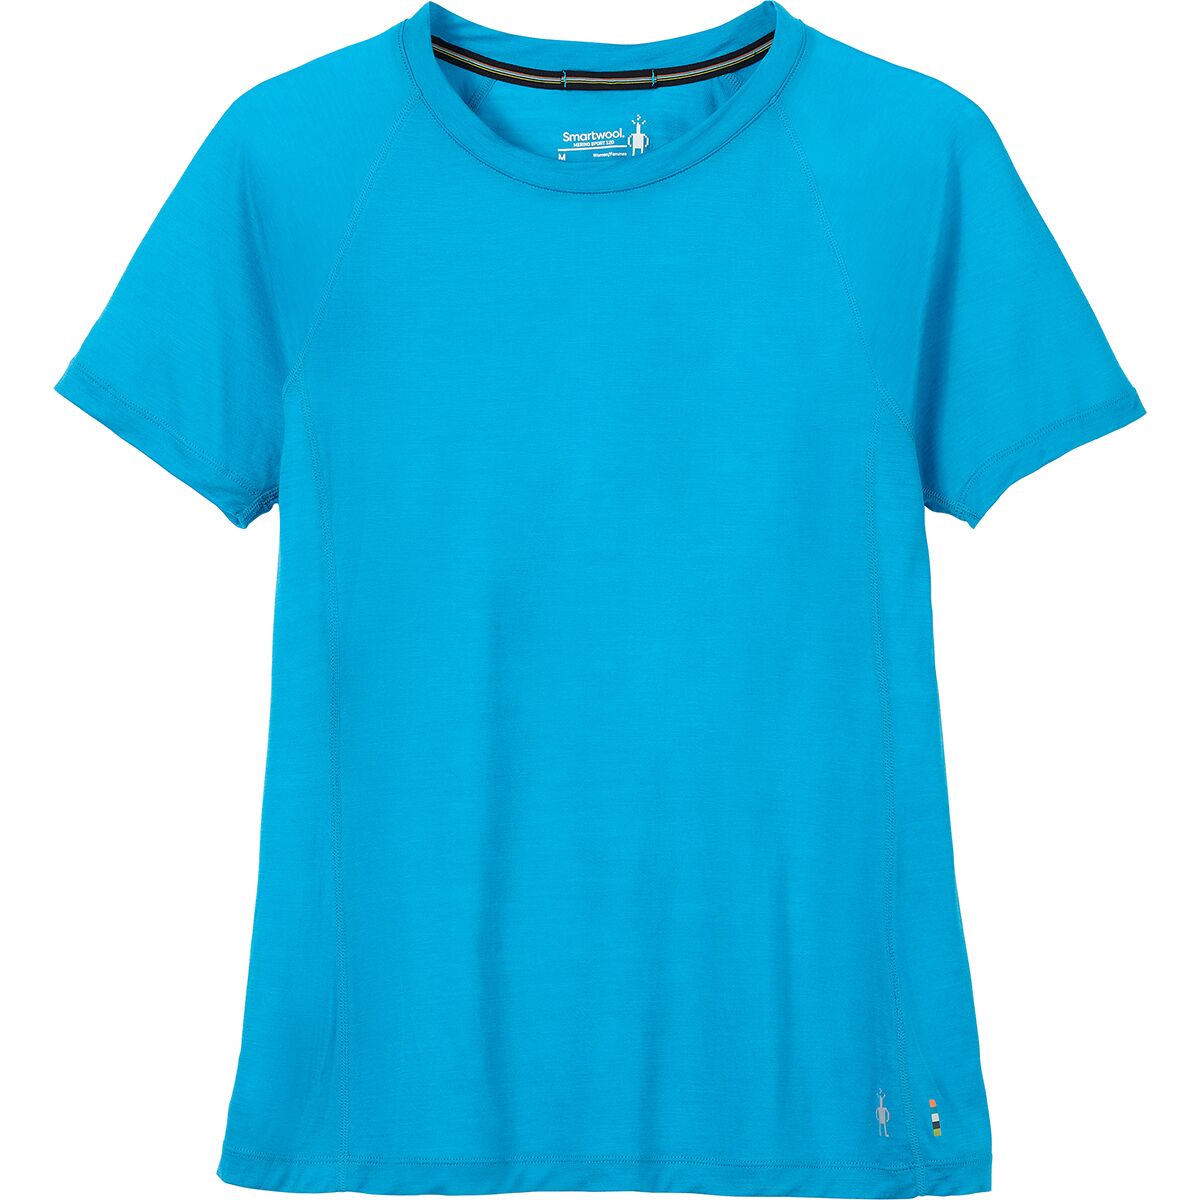 Smartwool Merino Sport Ultralite Short-Sleeve Shirt - Women's